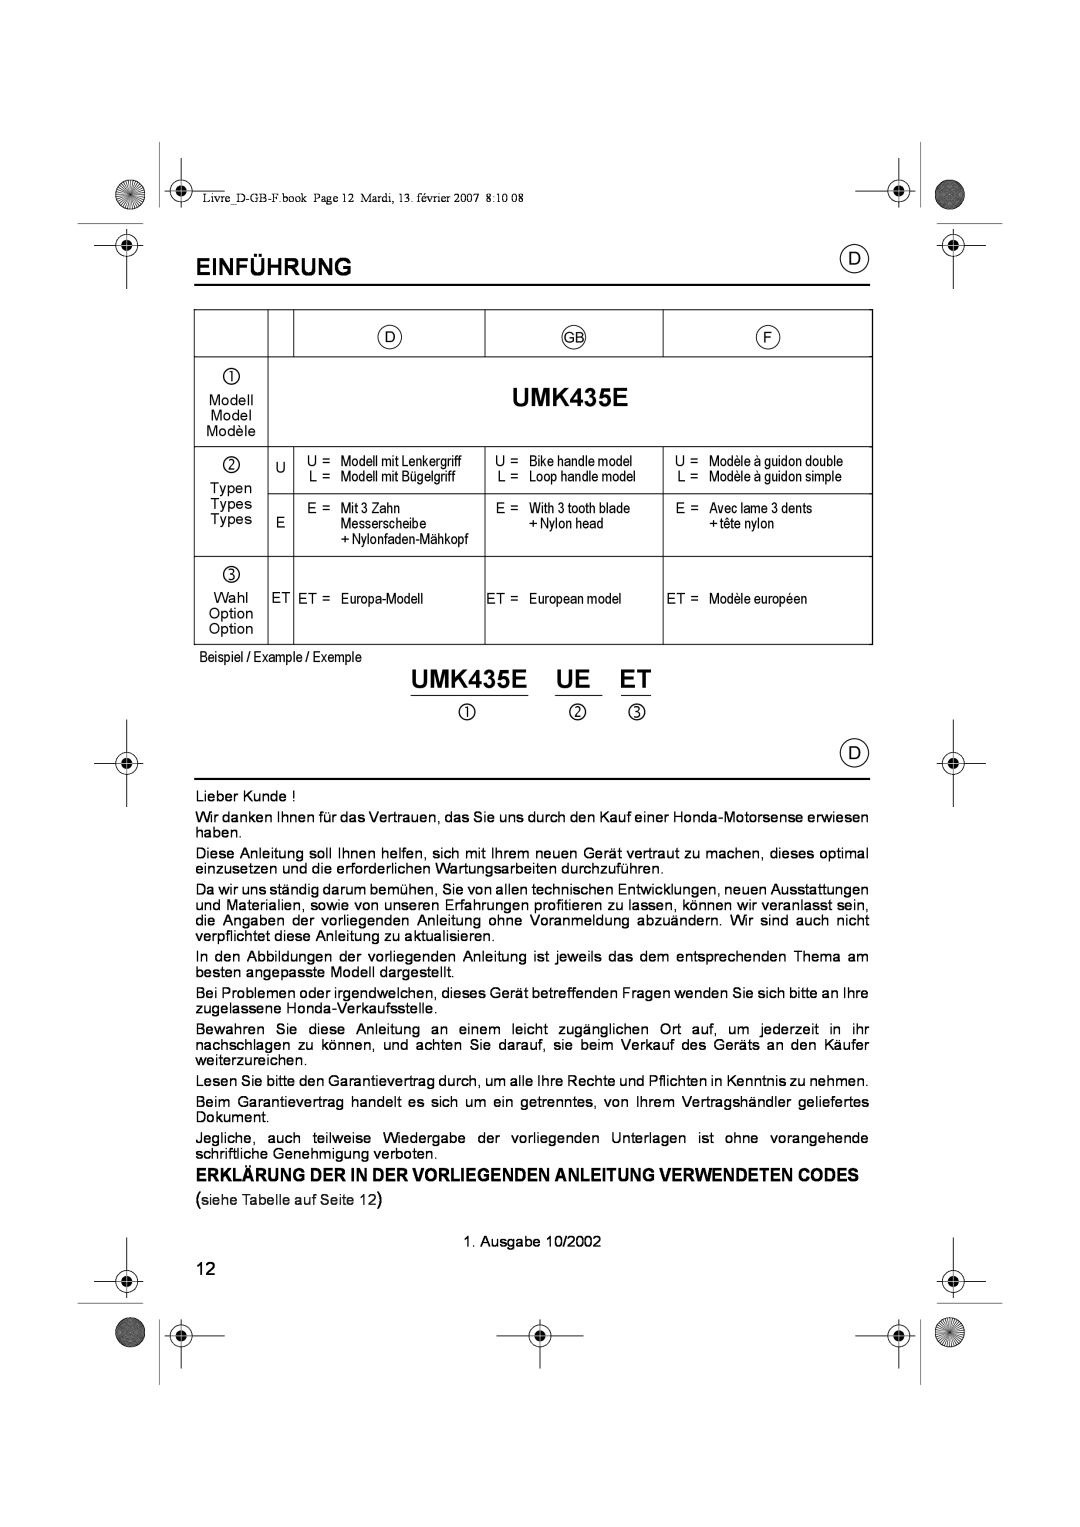 Honda Power Equipment owner manual Einführung, UMK435E UE ET, c d e, siehe Tabelle auf Seite 